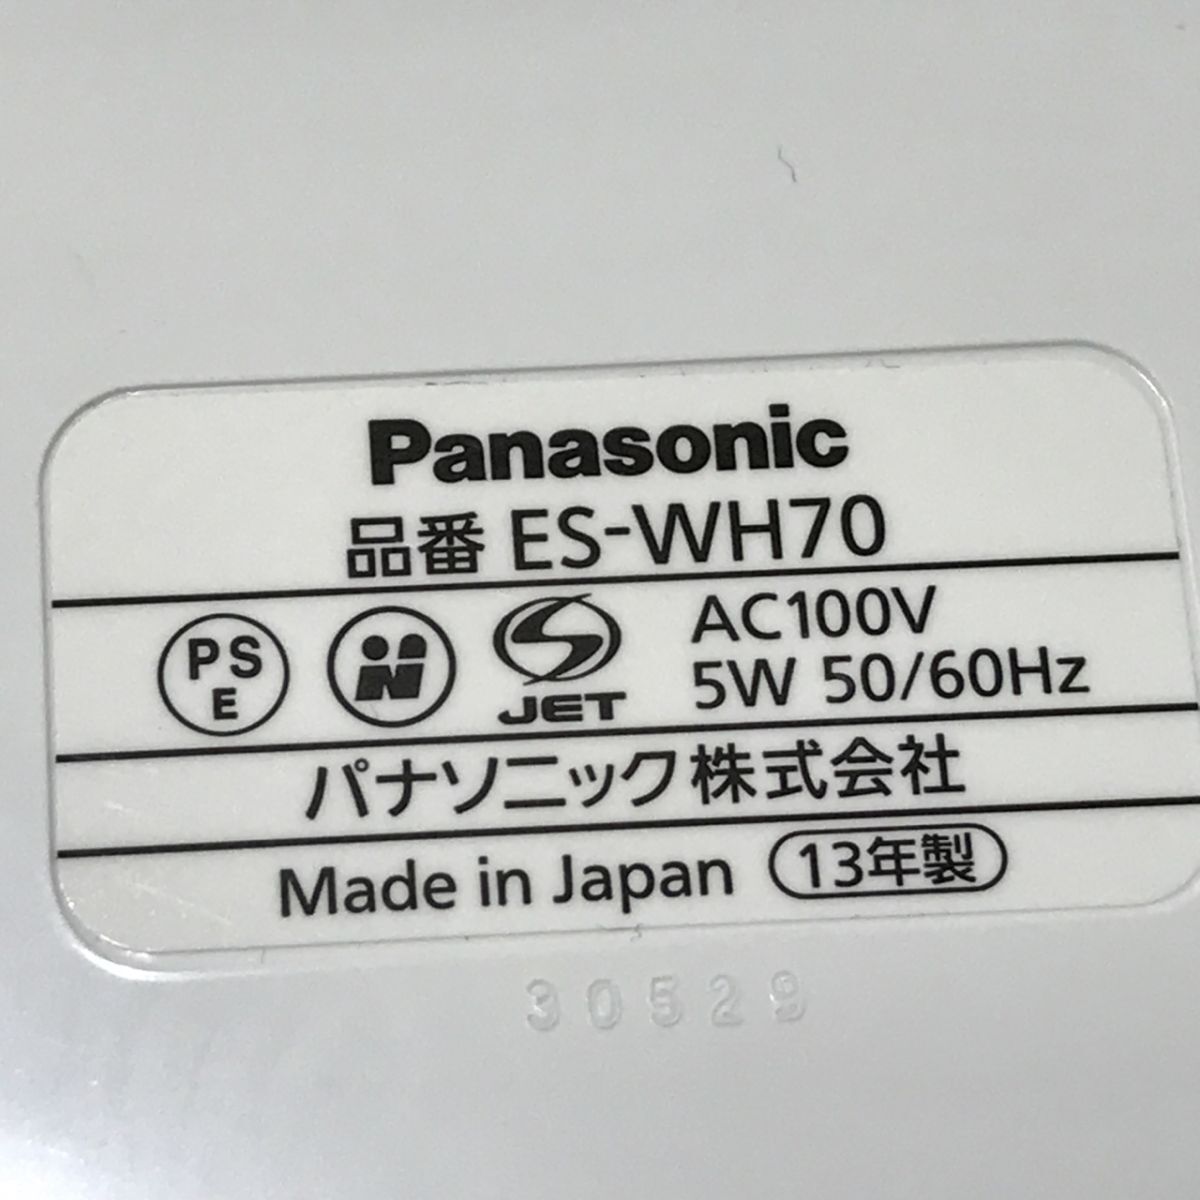 Panasonic 脱毛器 光エステ ボディ用 家庭用美容器 ES-WH70[C2870]_画像10